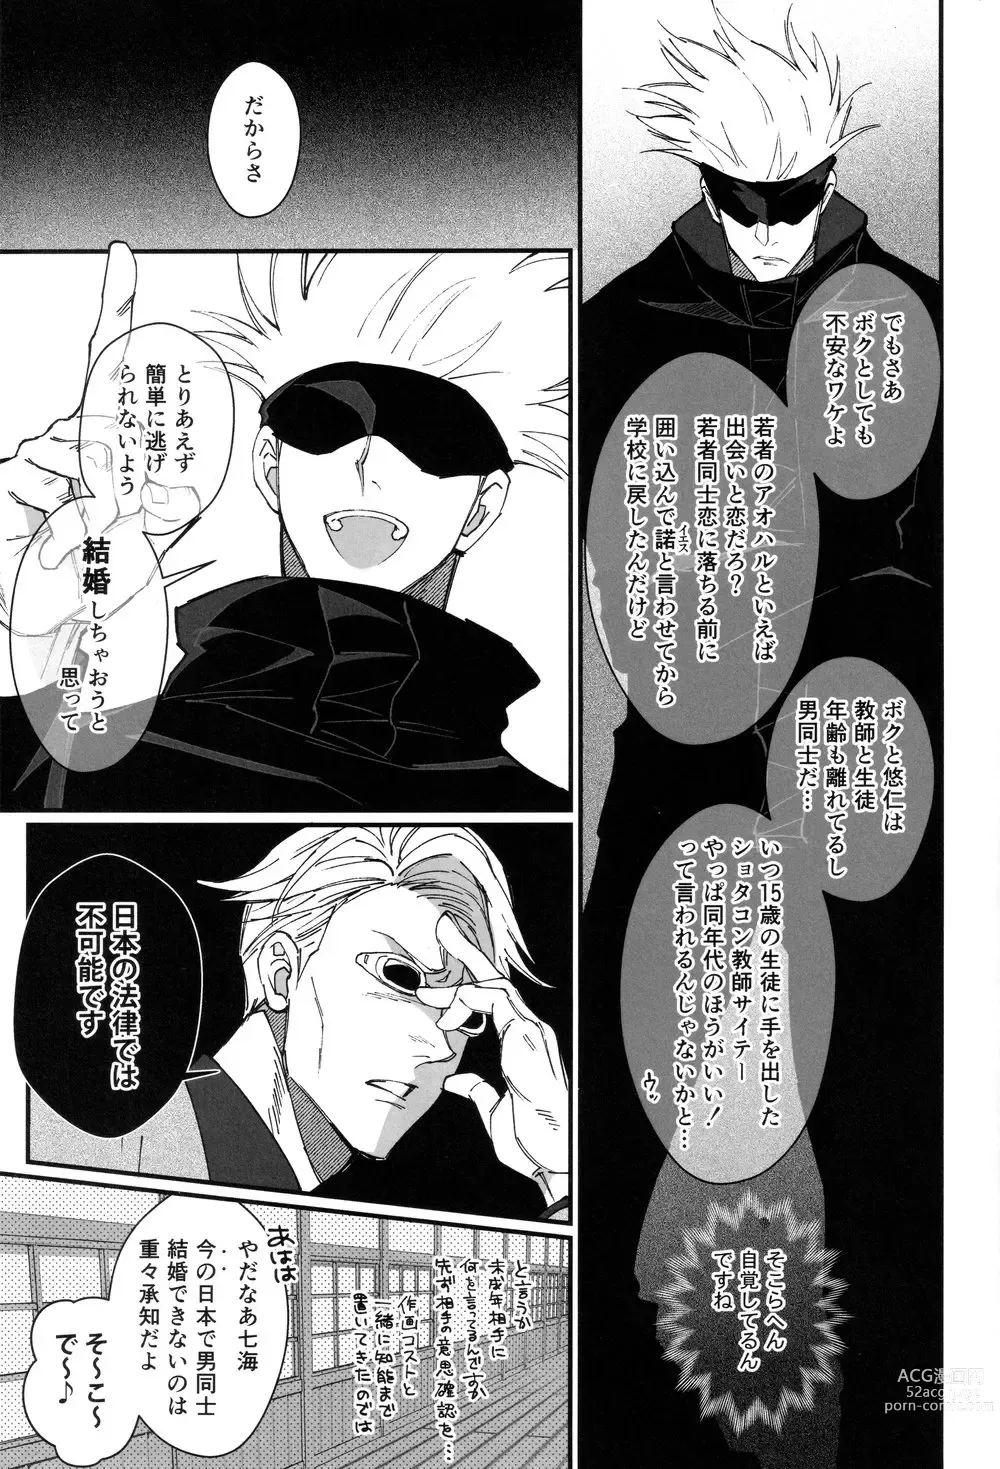 Page 6 of doujinshi Zoku Gachikoi Monster